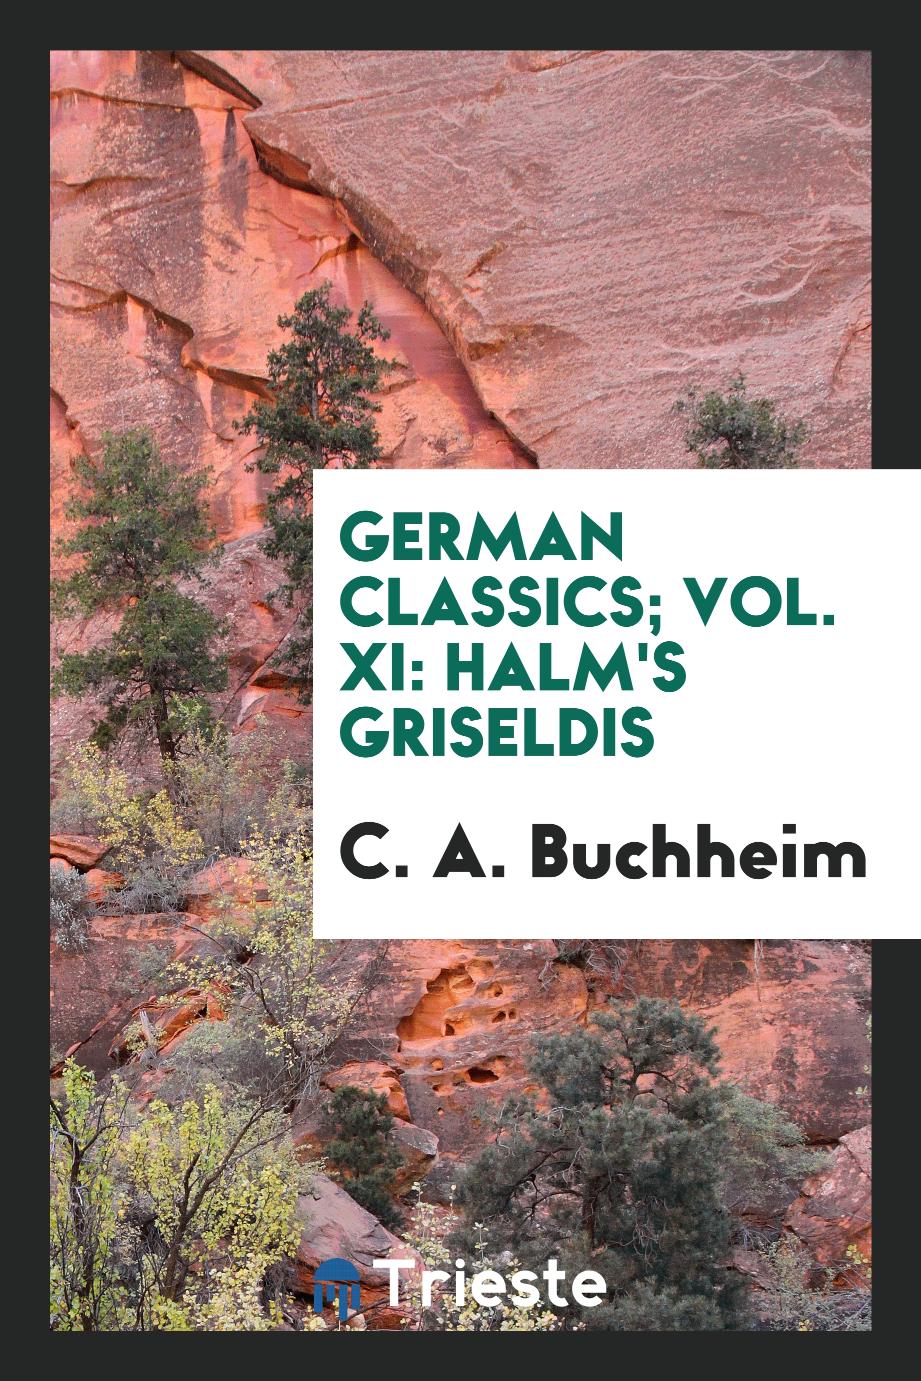 German classics; Vol. XI: Halm's griseldis